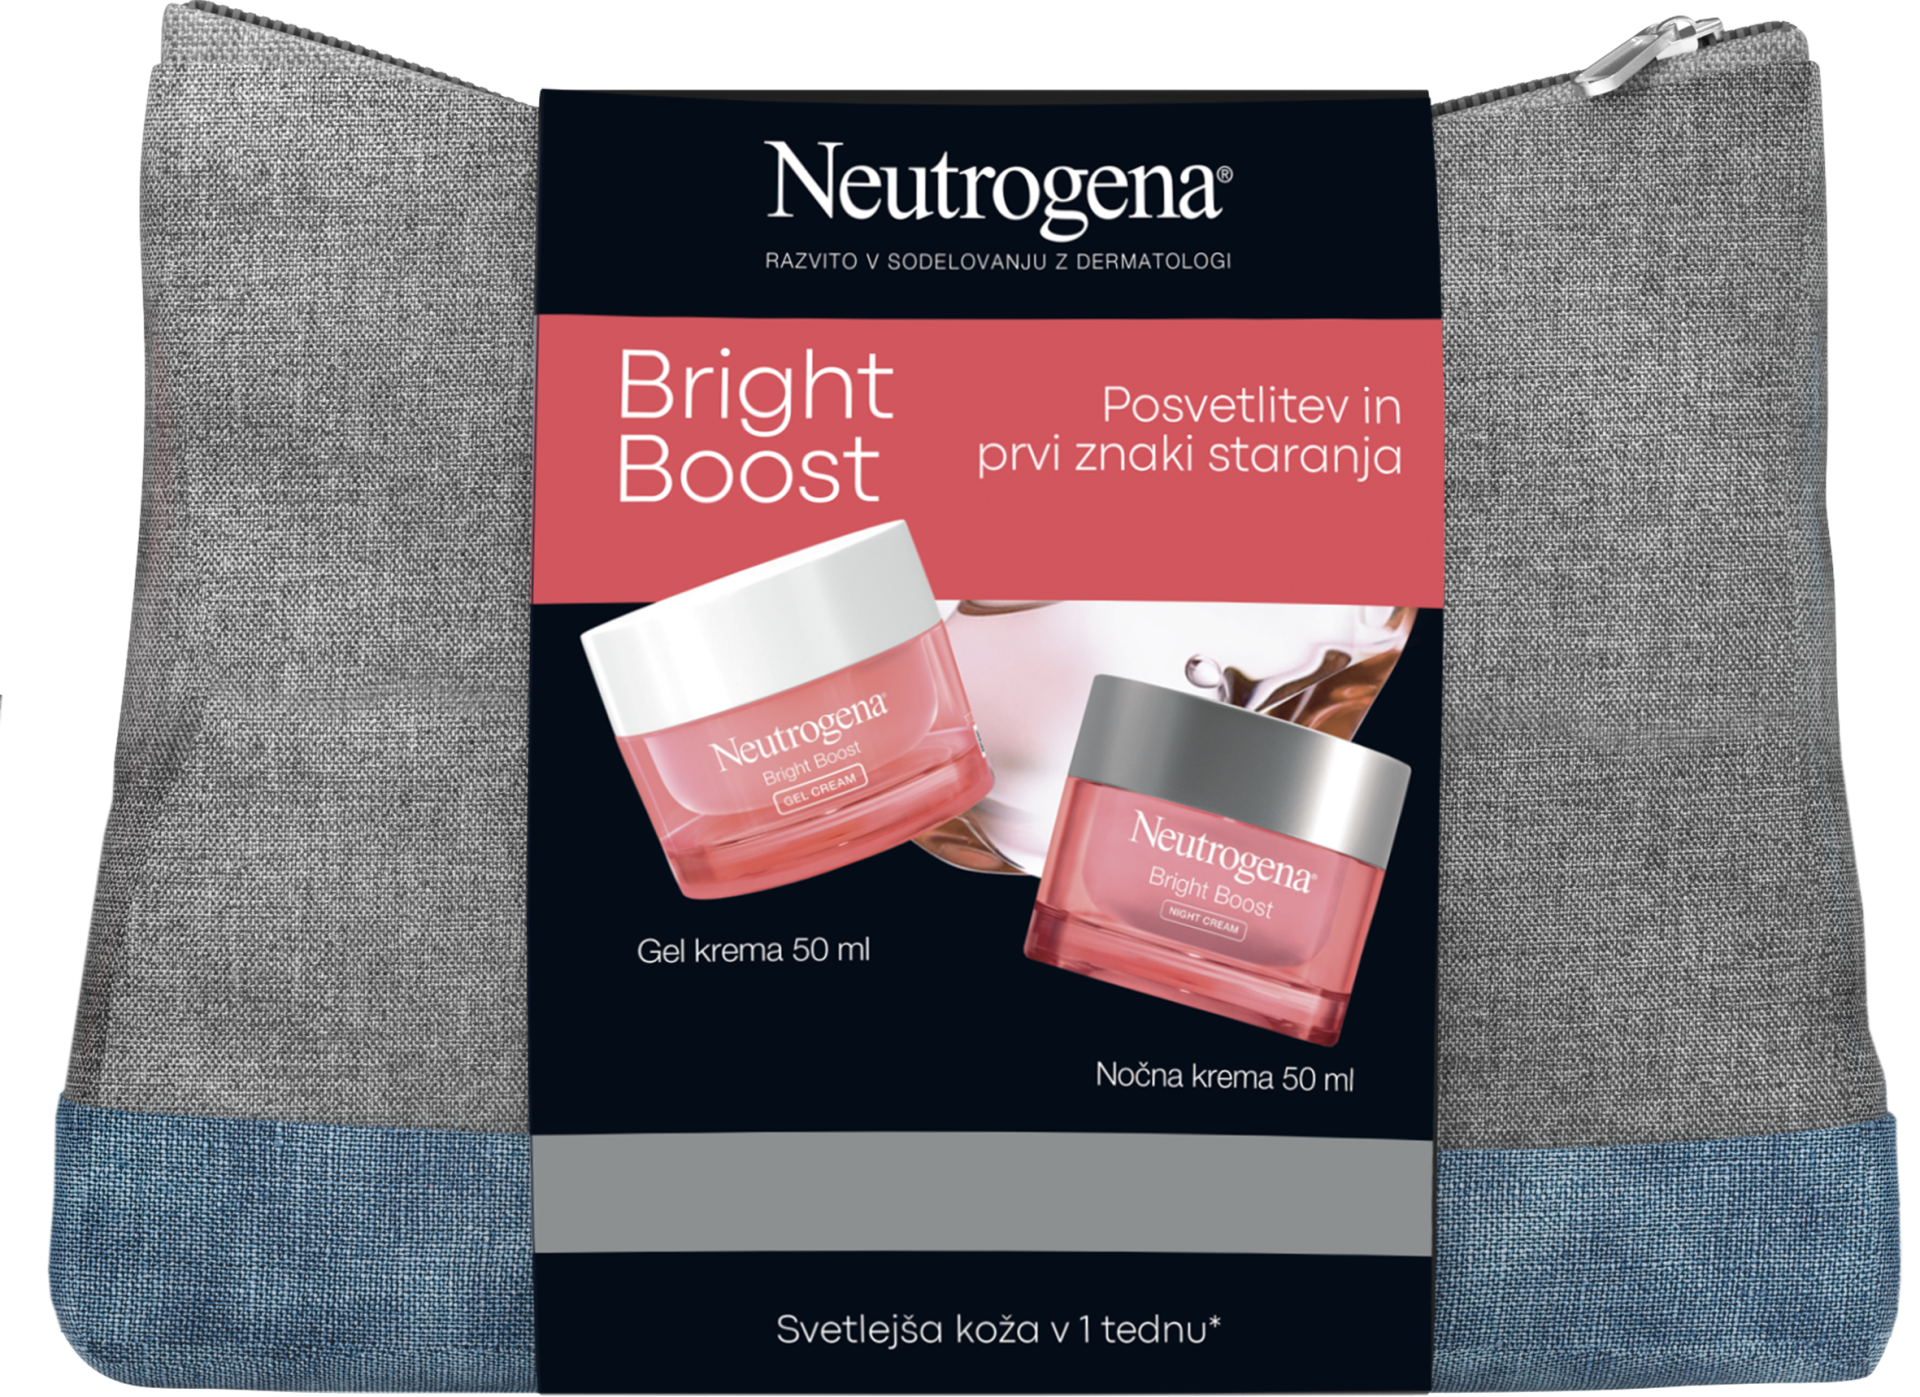 Neutrogena Bright Boost paket za nego obraza (gel krema 50 ml + nočna krema 50 ml + toaletna torbica)